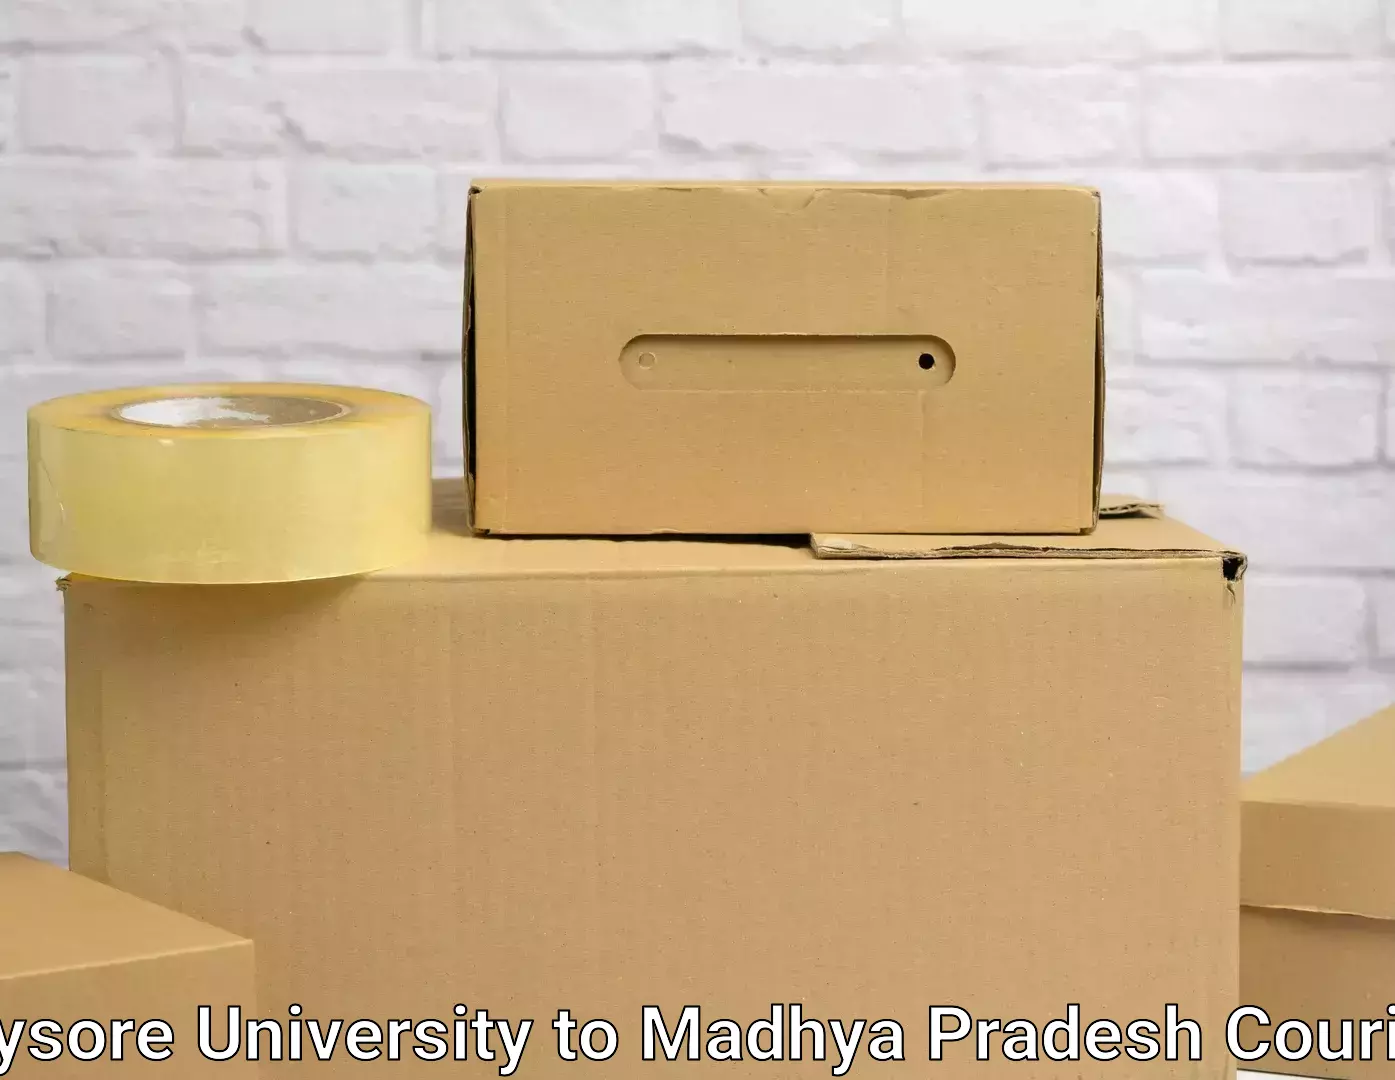 Household moving experts Mysore University to Lashkar